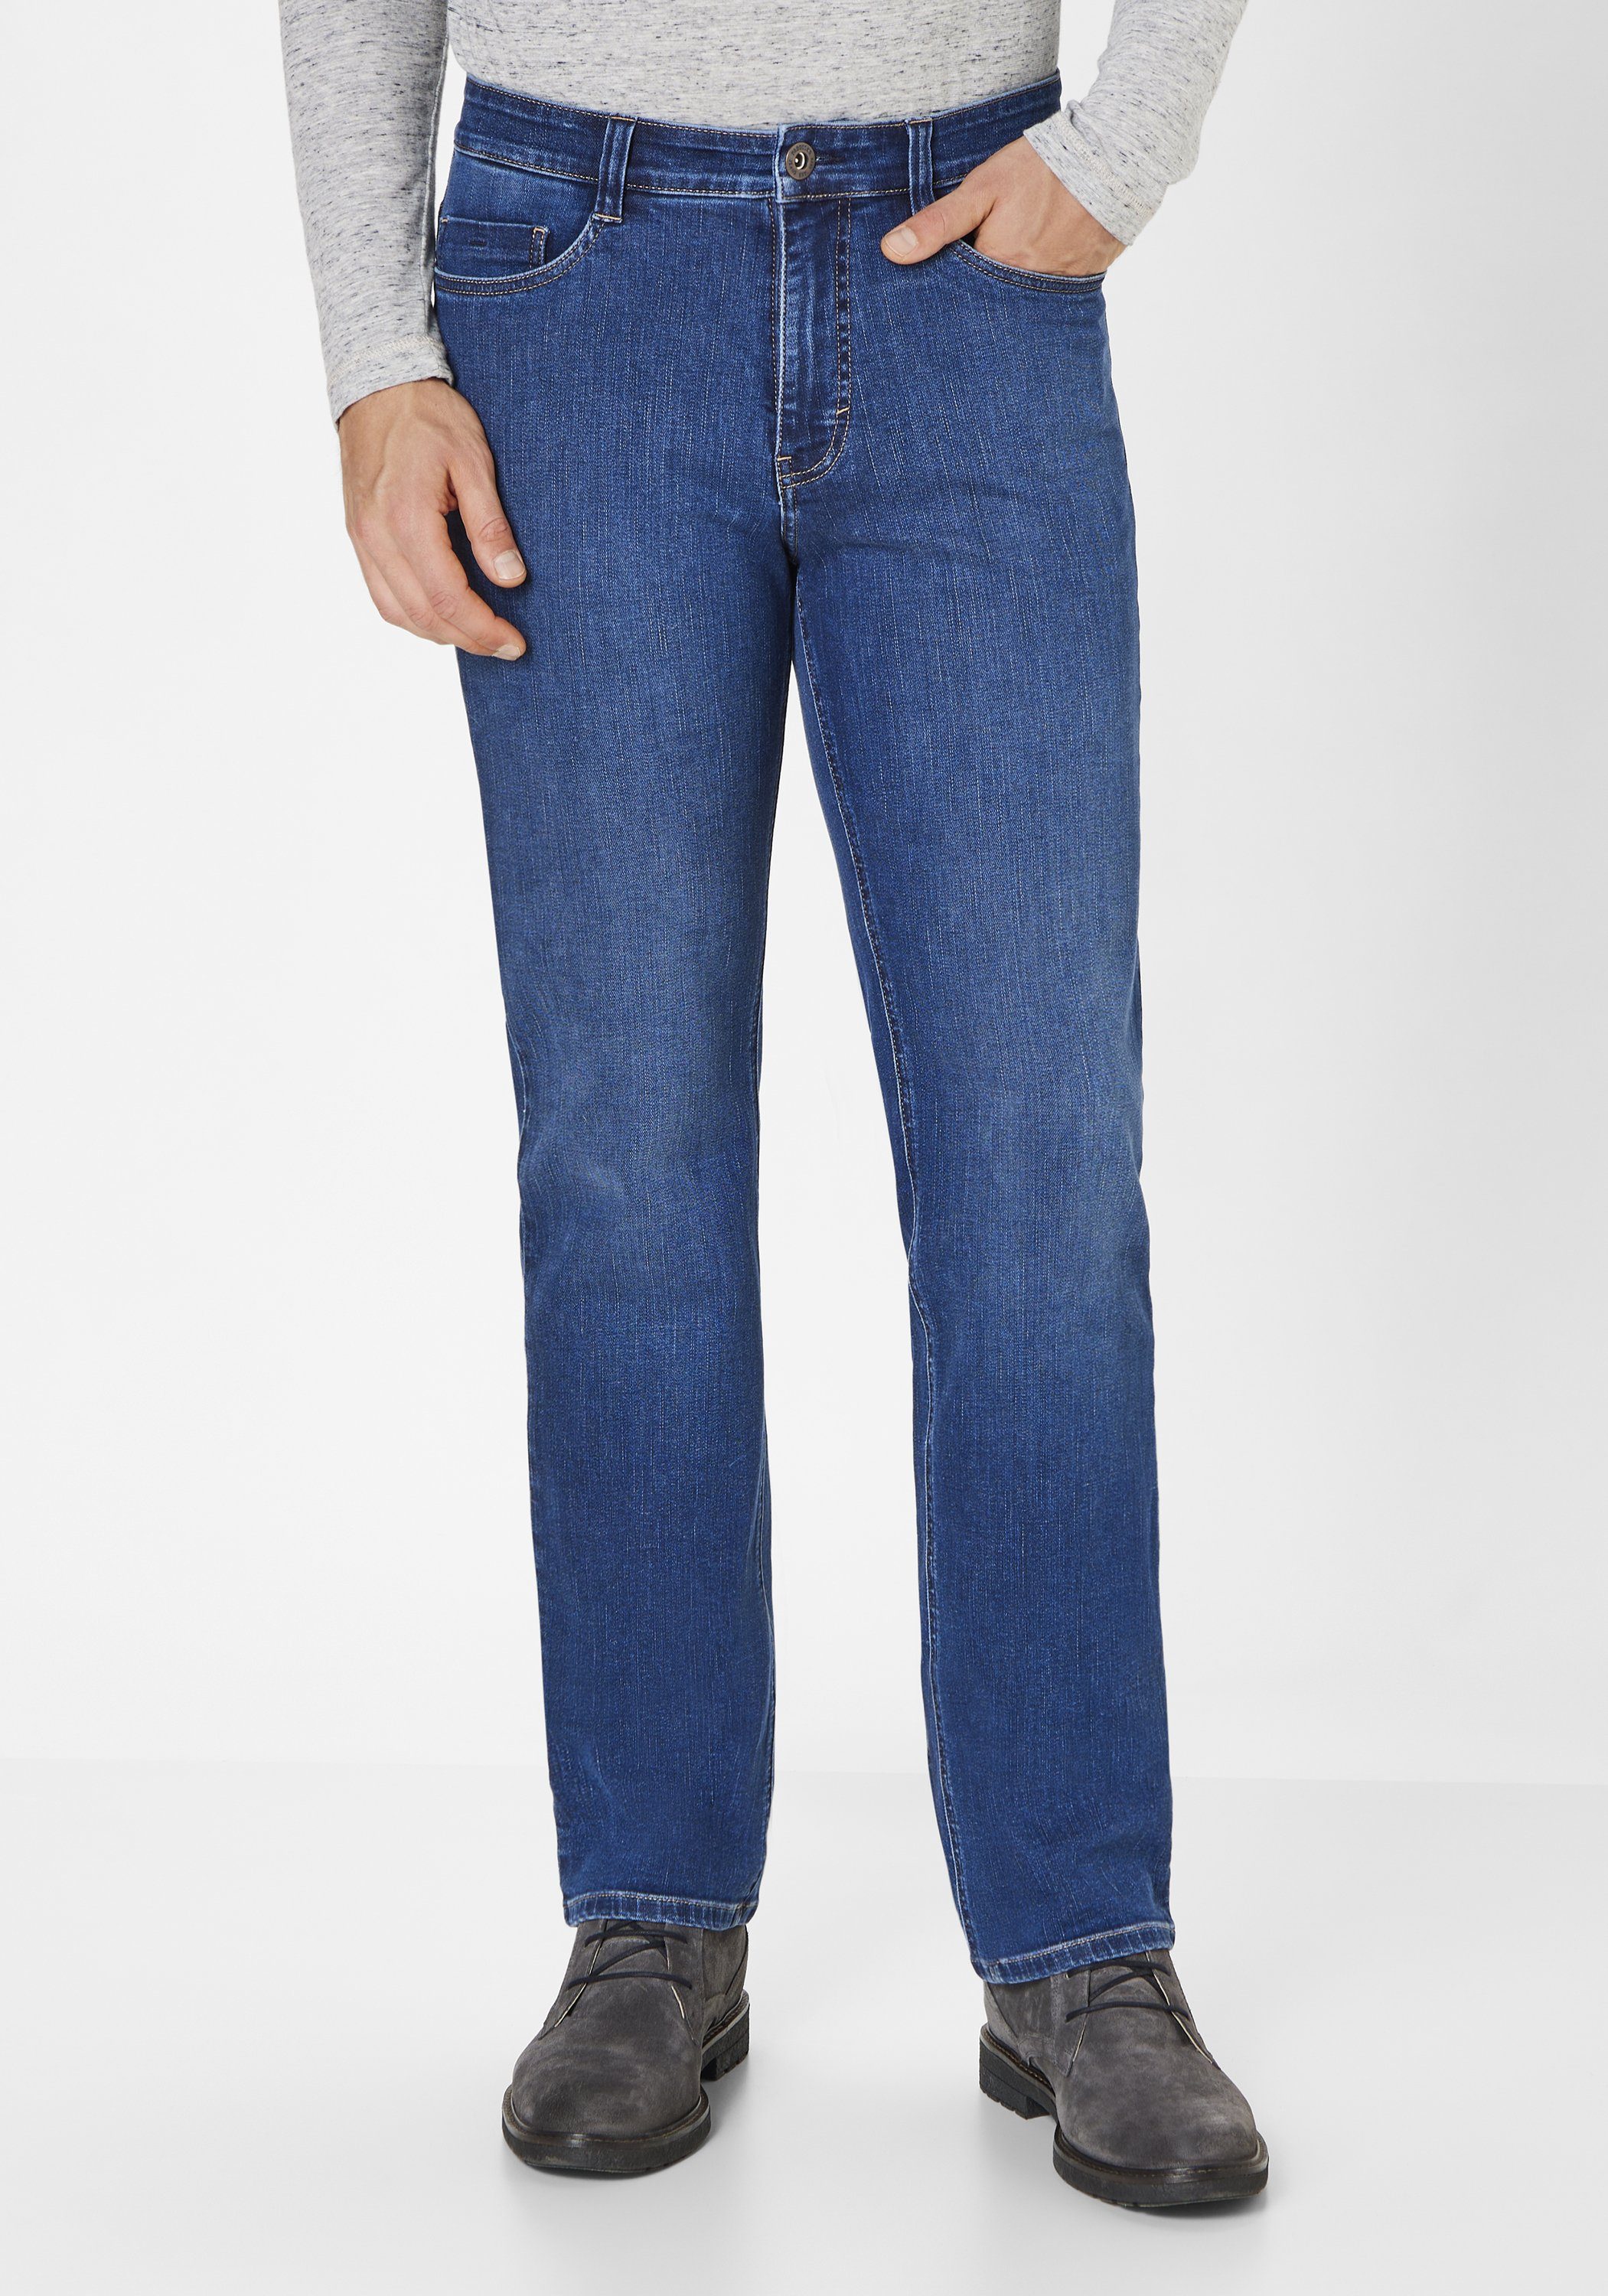 Paddock's Slim-fit-Jeans RANGER Slim-Fit Stretchjeans Motion & Comfort blue/dark stone+soft using